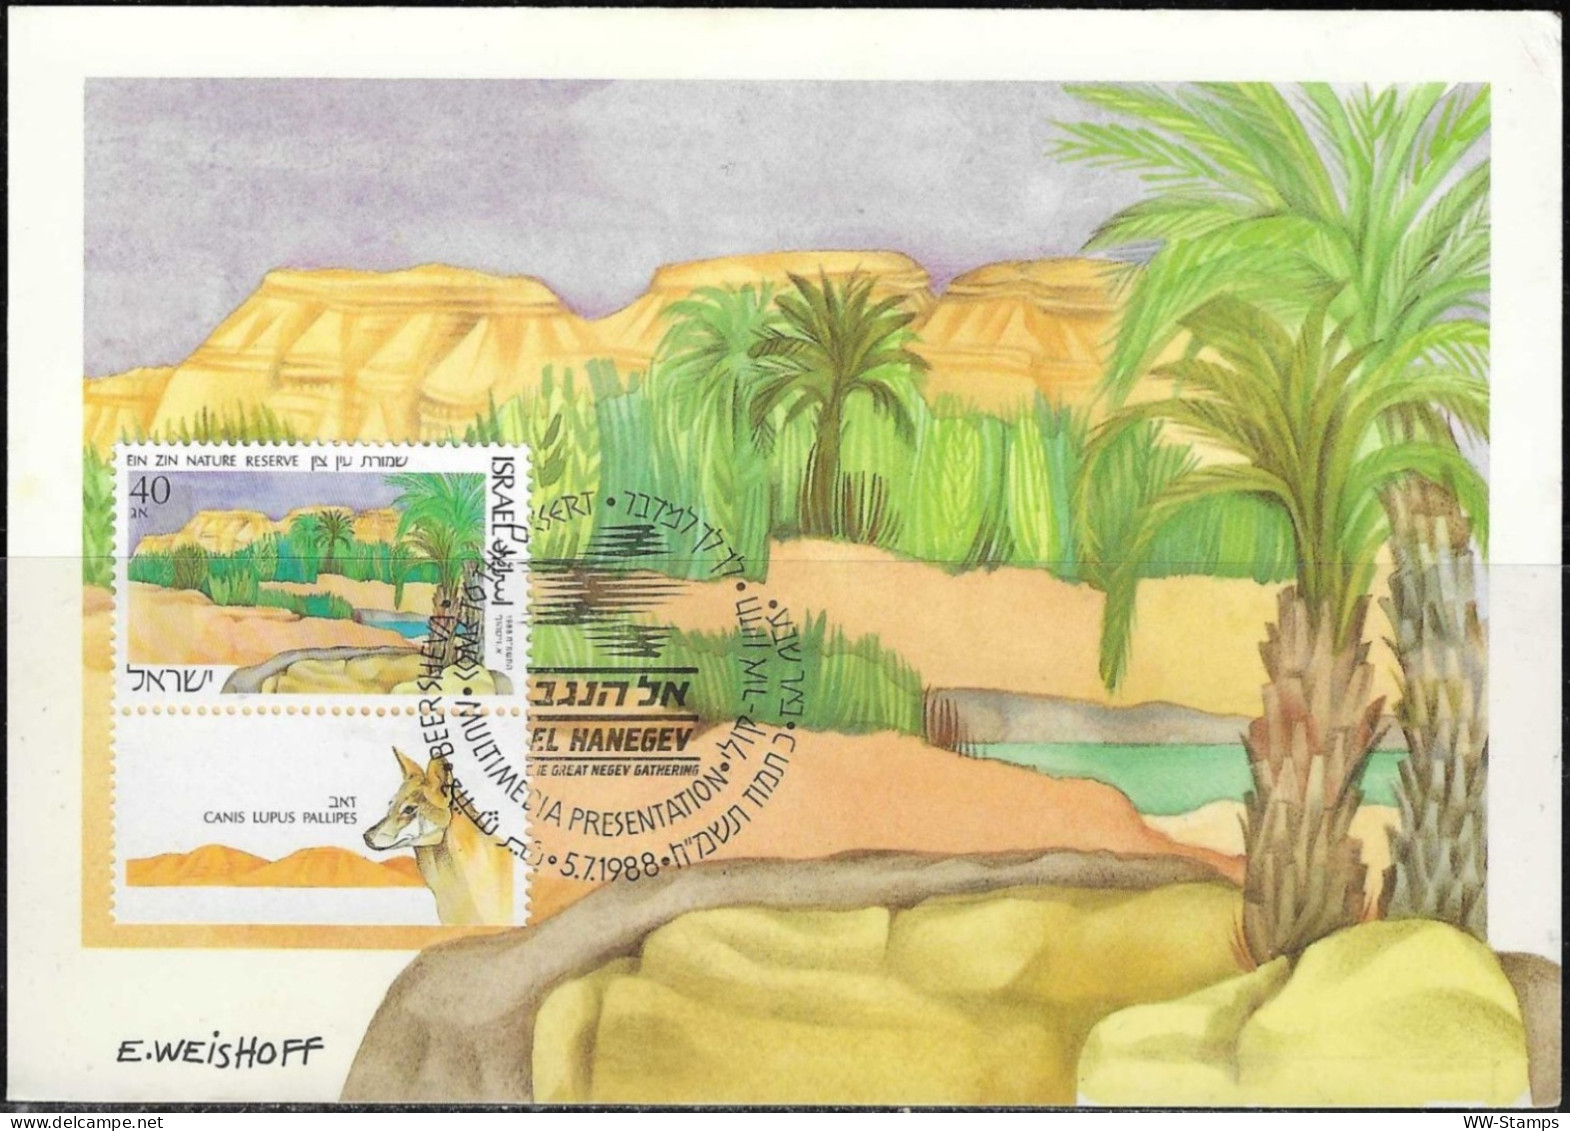 Israel 1988 Maximum Card Ein Zin Nature Reserve In The Negev Lupus [ILT1118] - Maximumkarten